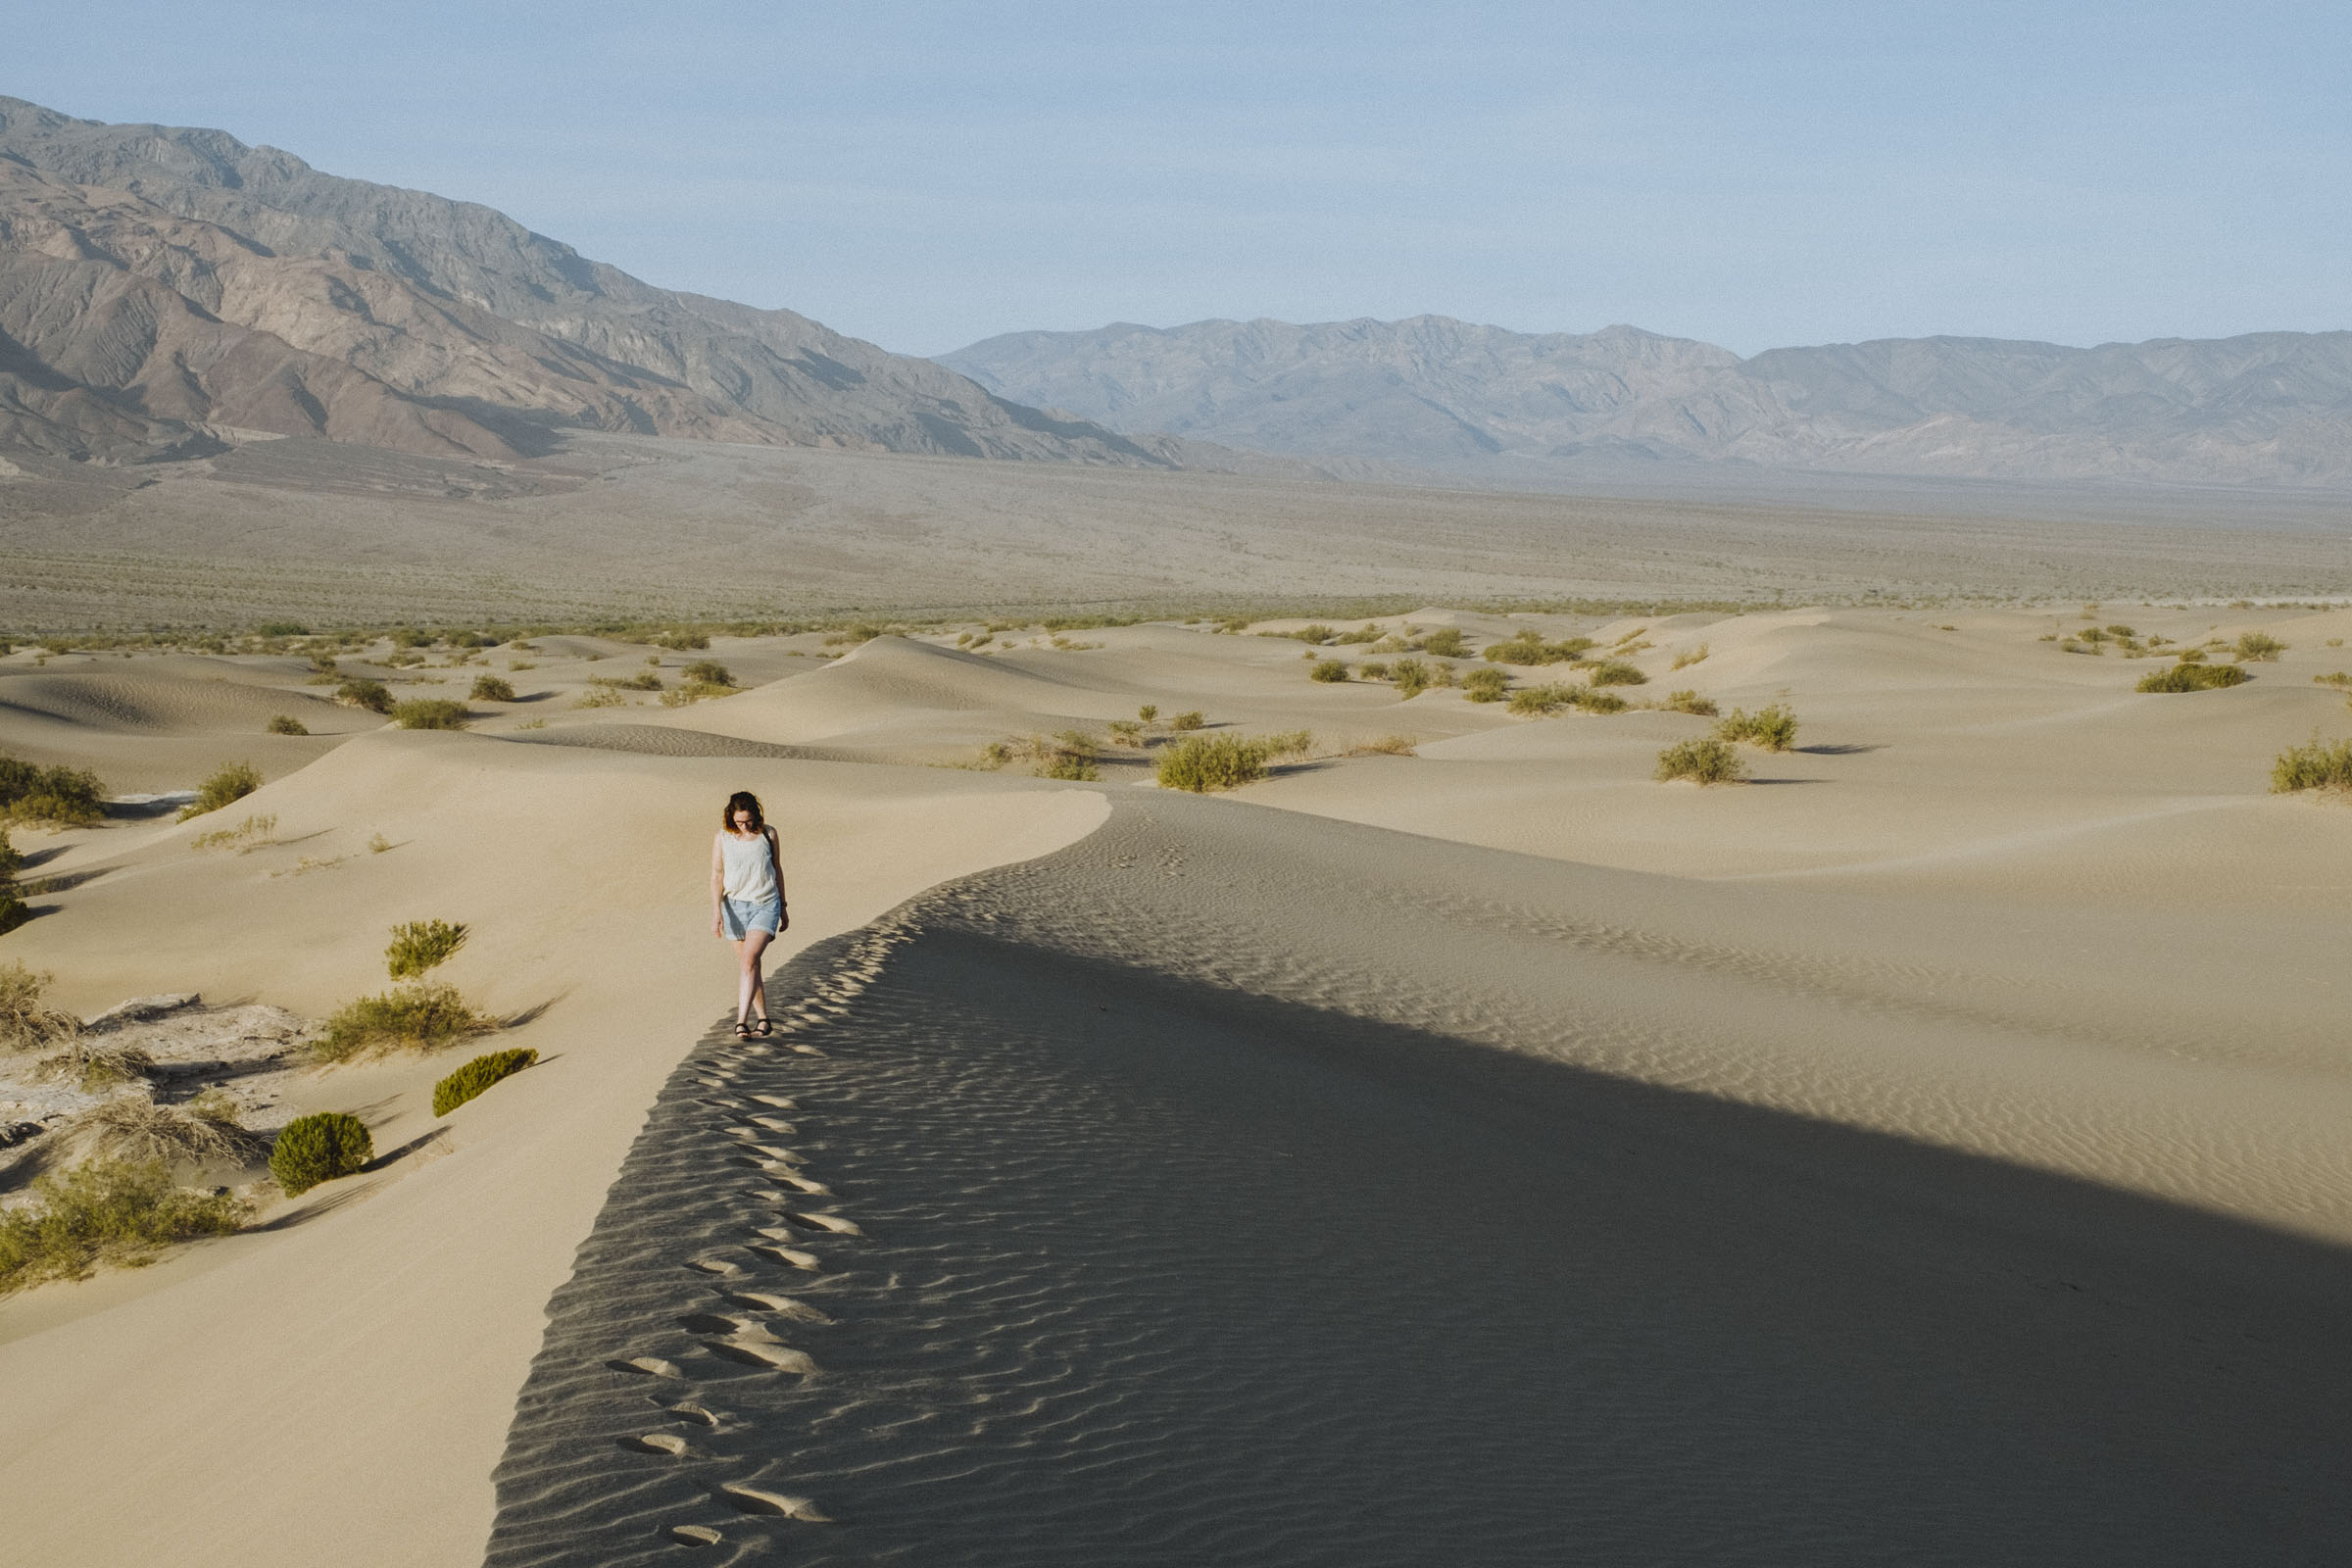 Wandering the Mesquite Flat Dunes in Death Valley